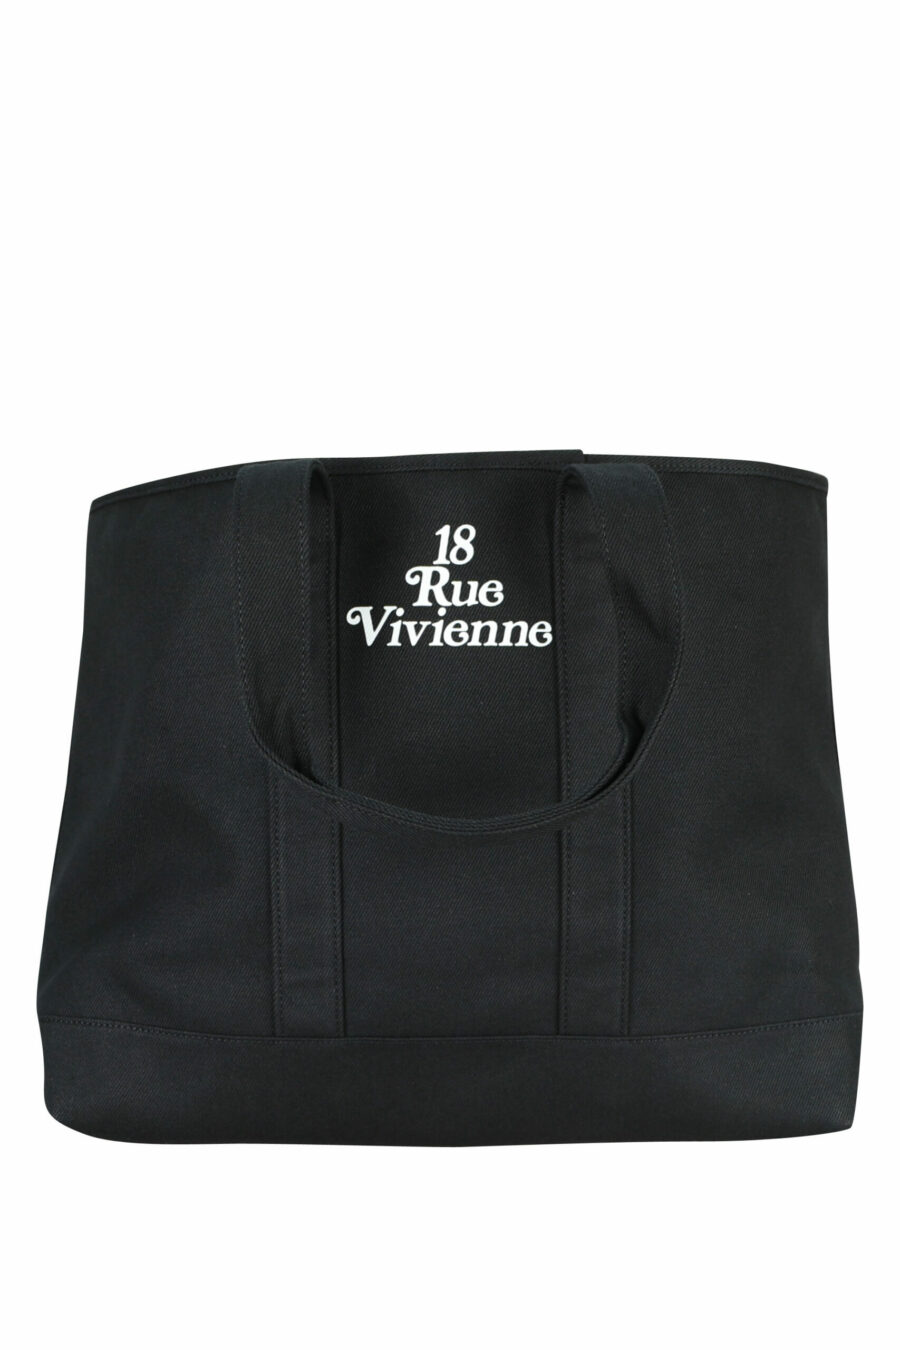 Tote bag black with maxilogo "kenzo utility" - 3612230581388 2 scaled